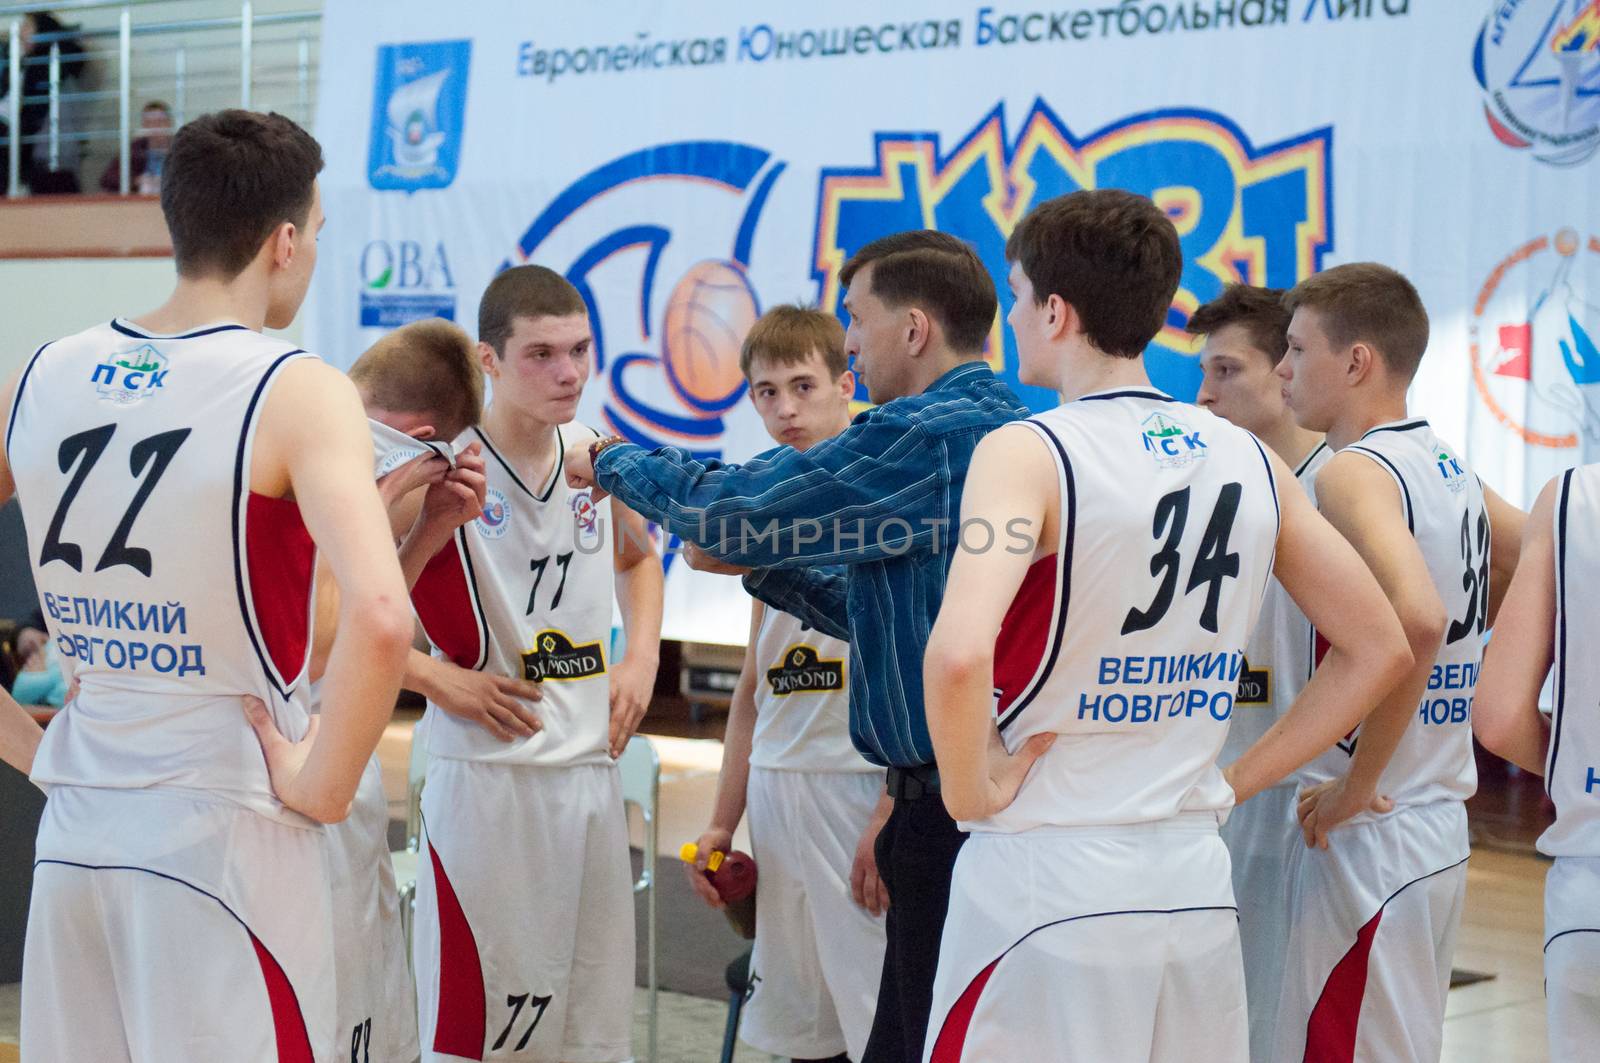 KALININGRAD - APRIL 4: Basketball competitions european youth basketball league (EYBL), 4 April, 2014 in Kaliningrad Russia.